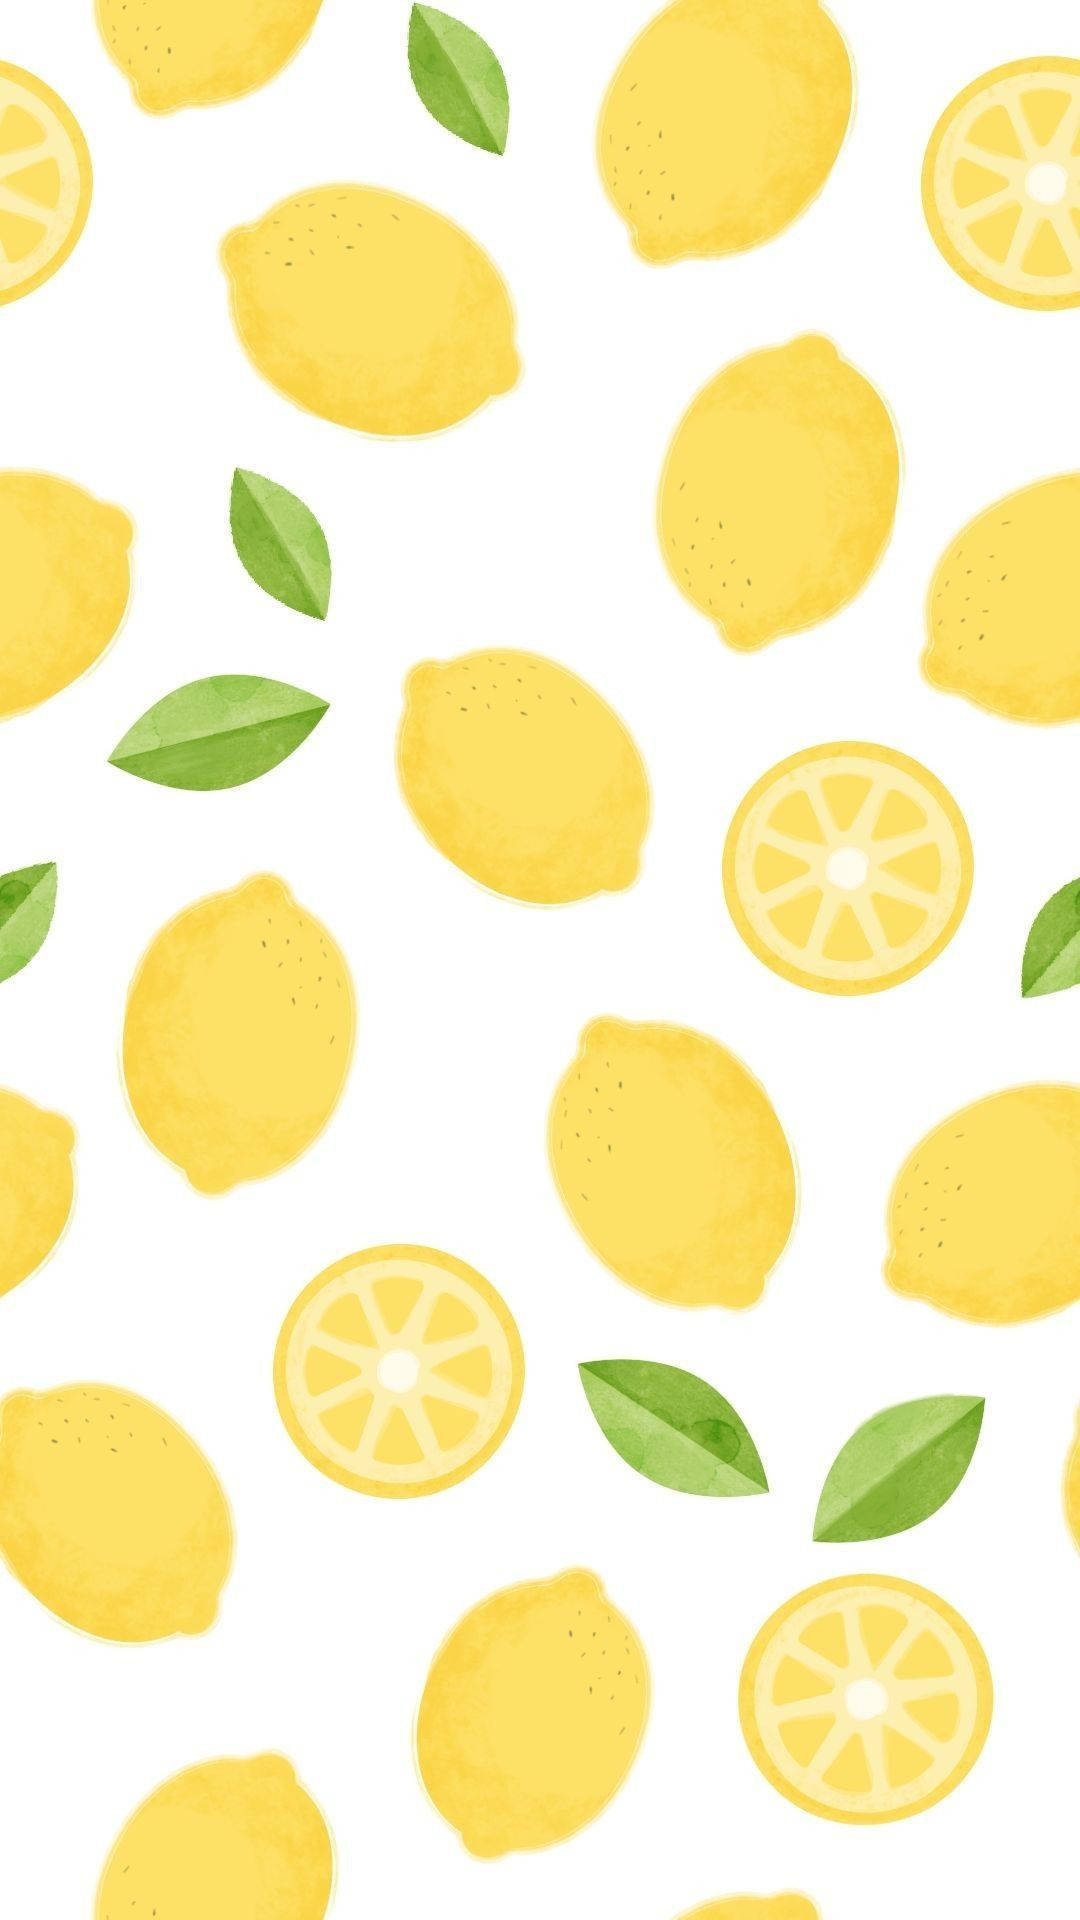 Lemon 1080X1920 Wallpaper and Background Image